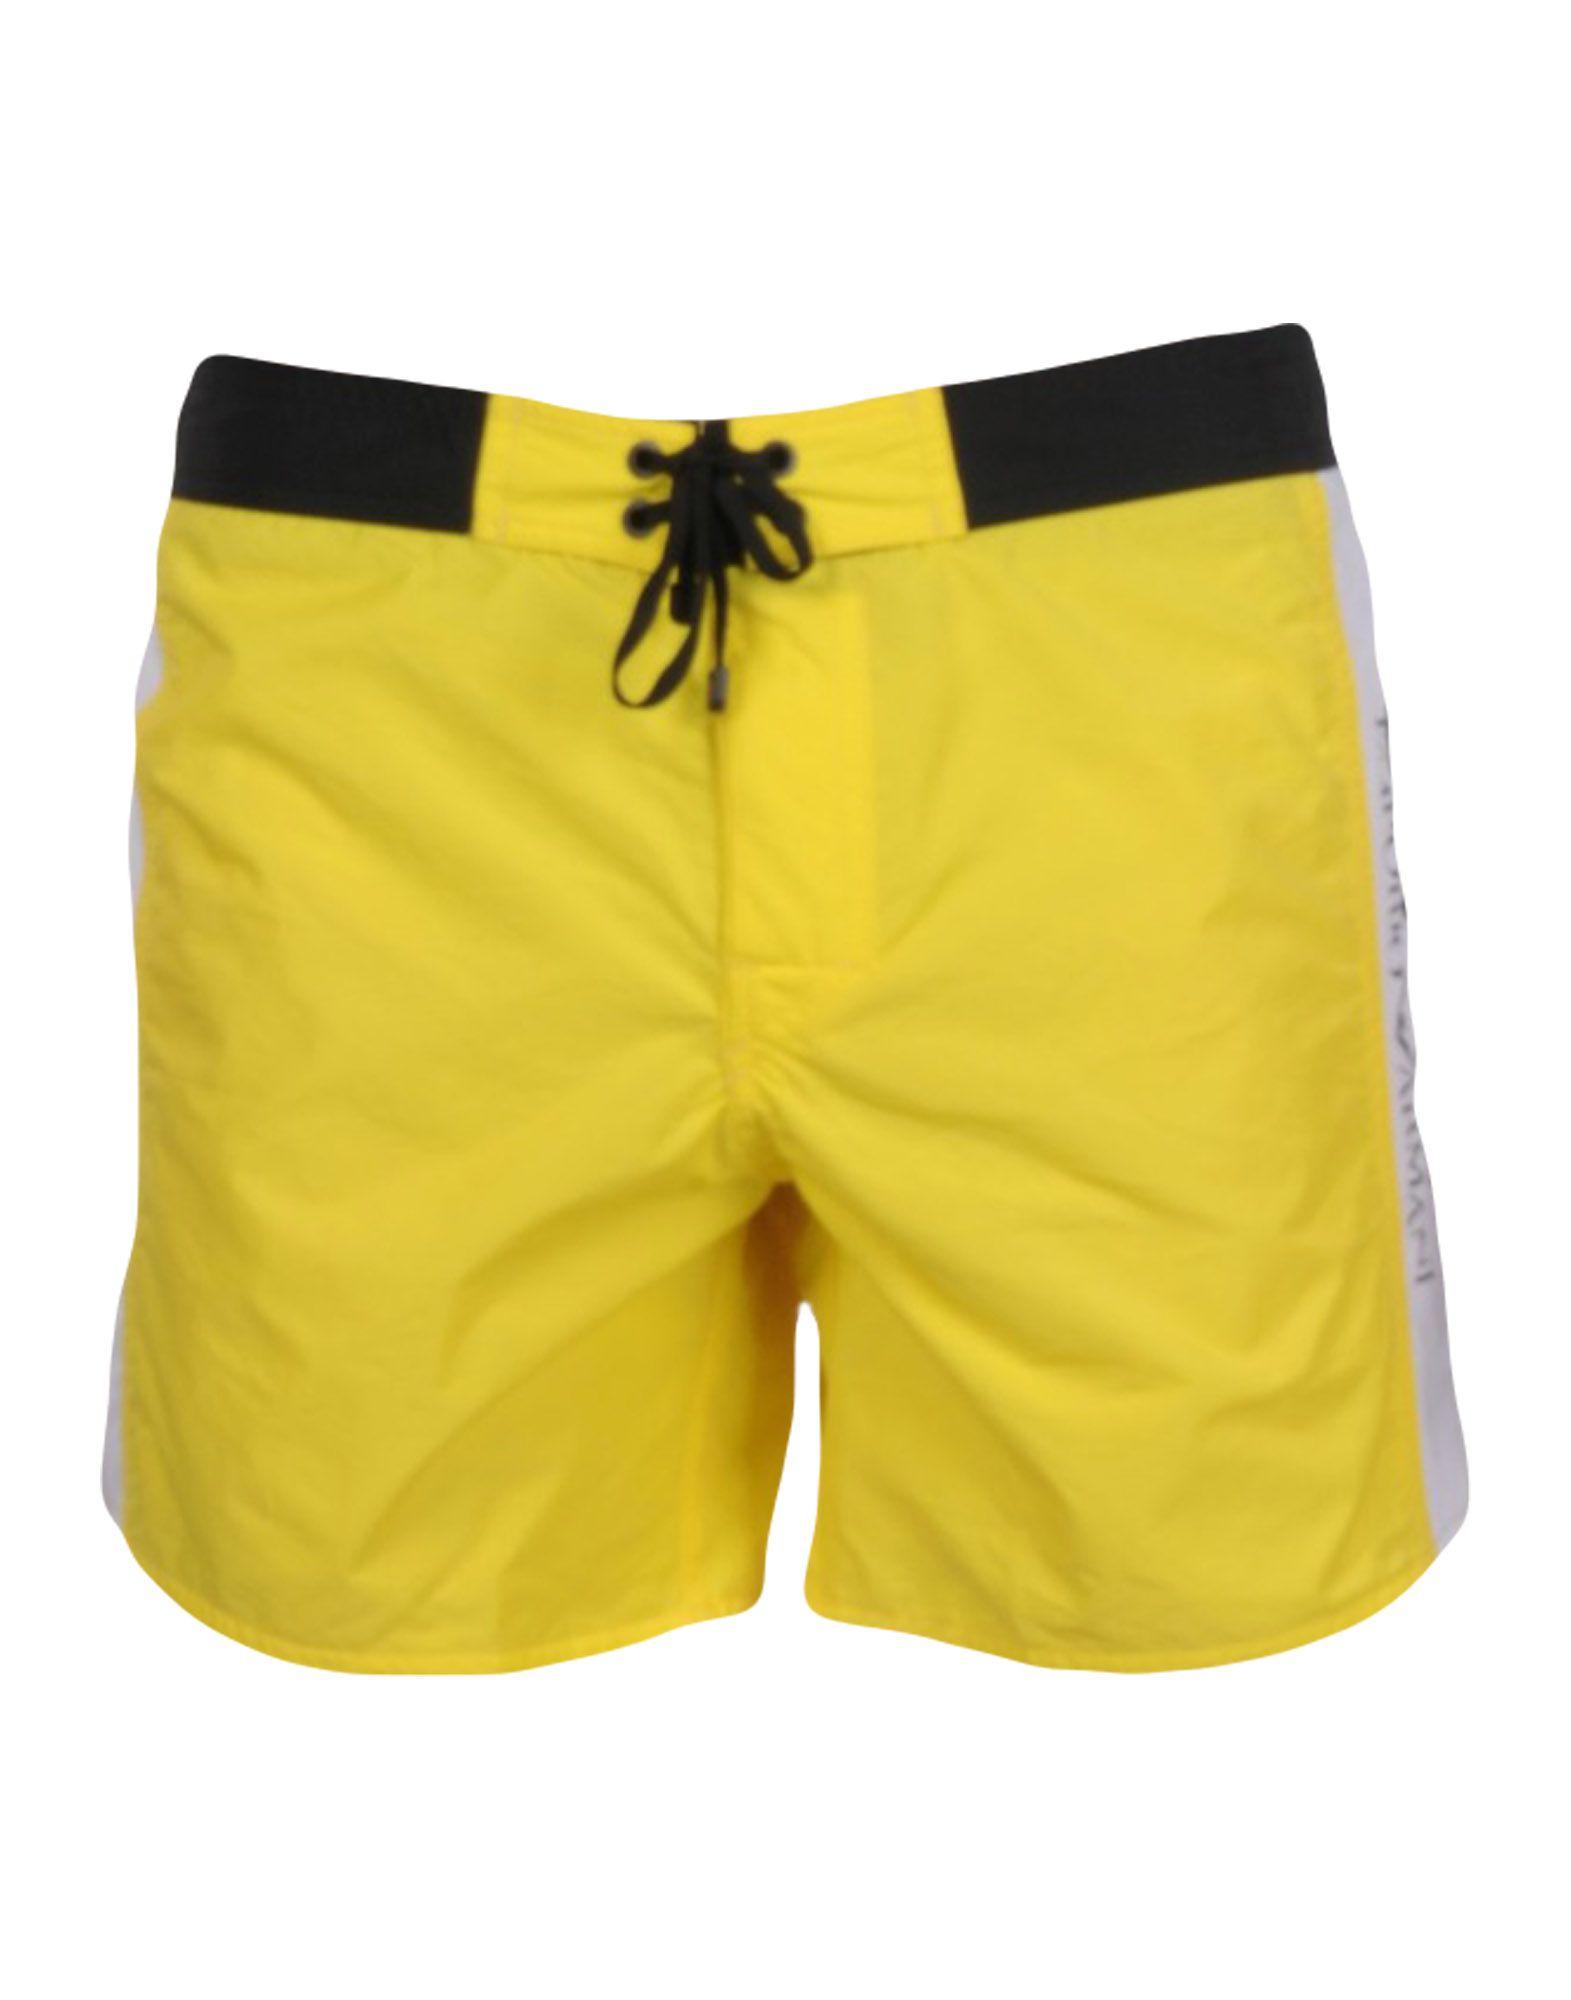 Lyst - Ea7 Swim Trunks in Yellow for Men